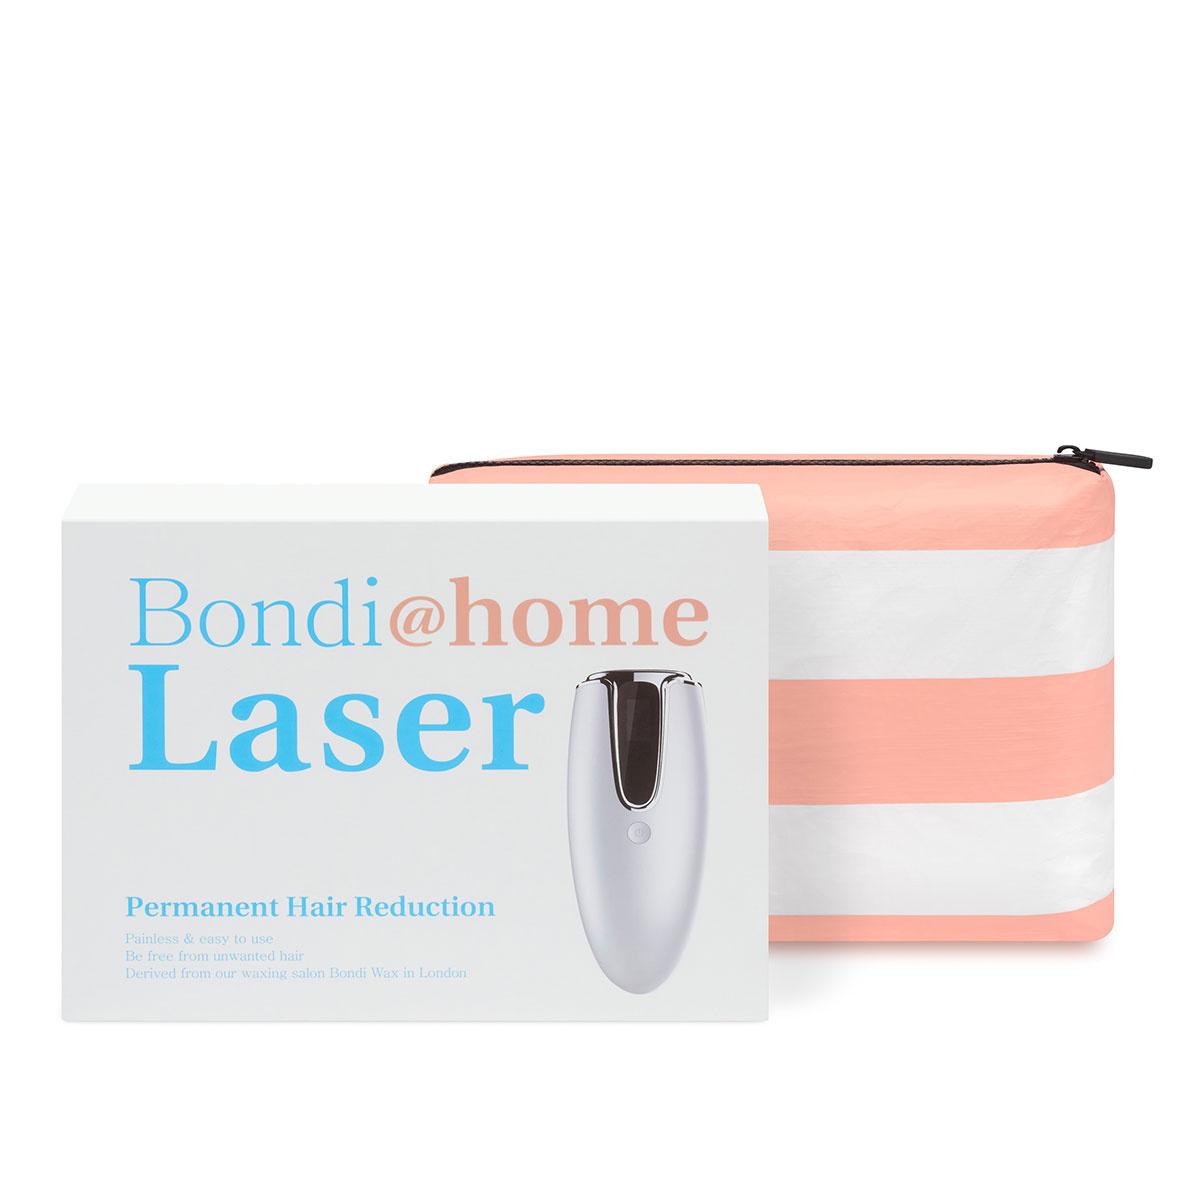 Laser hair removal at home Bondi laser